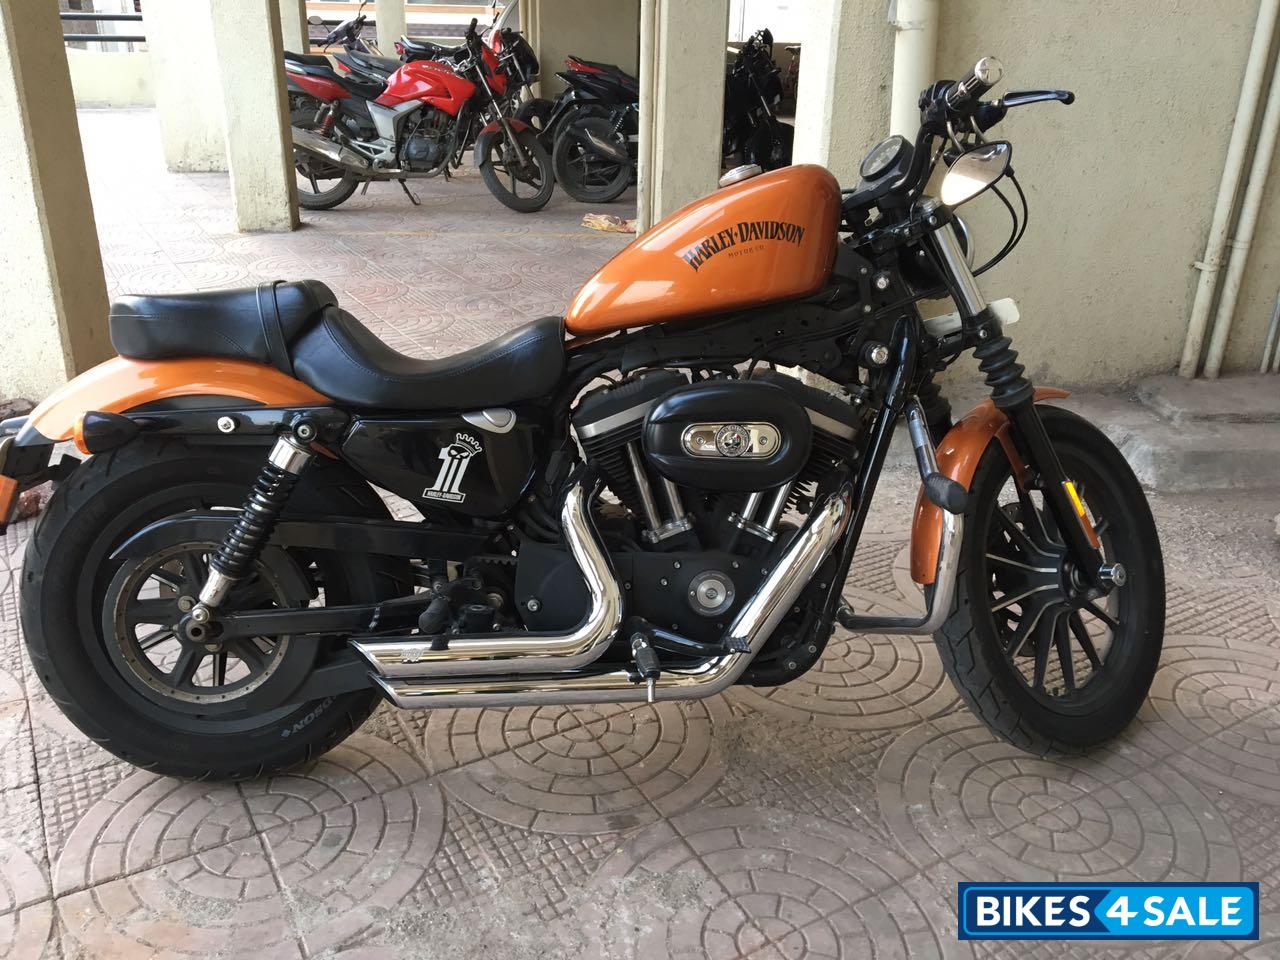 Harley Davidson Iron 883 Second Hand Price In Delhi Promotion Off57